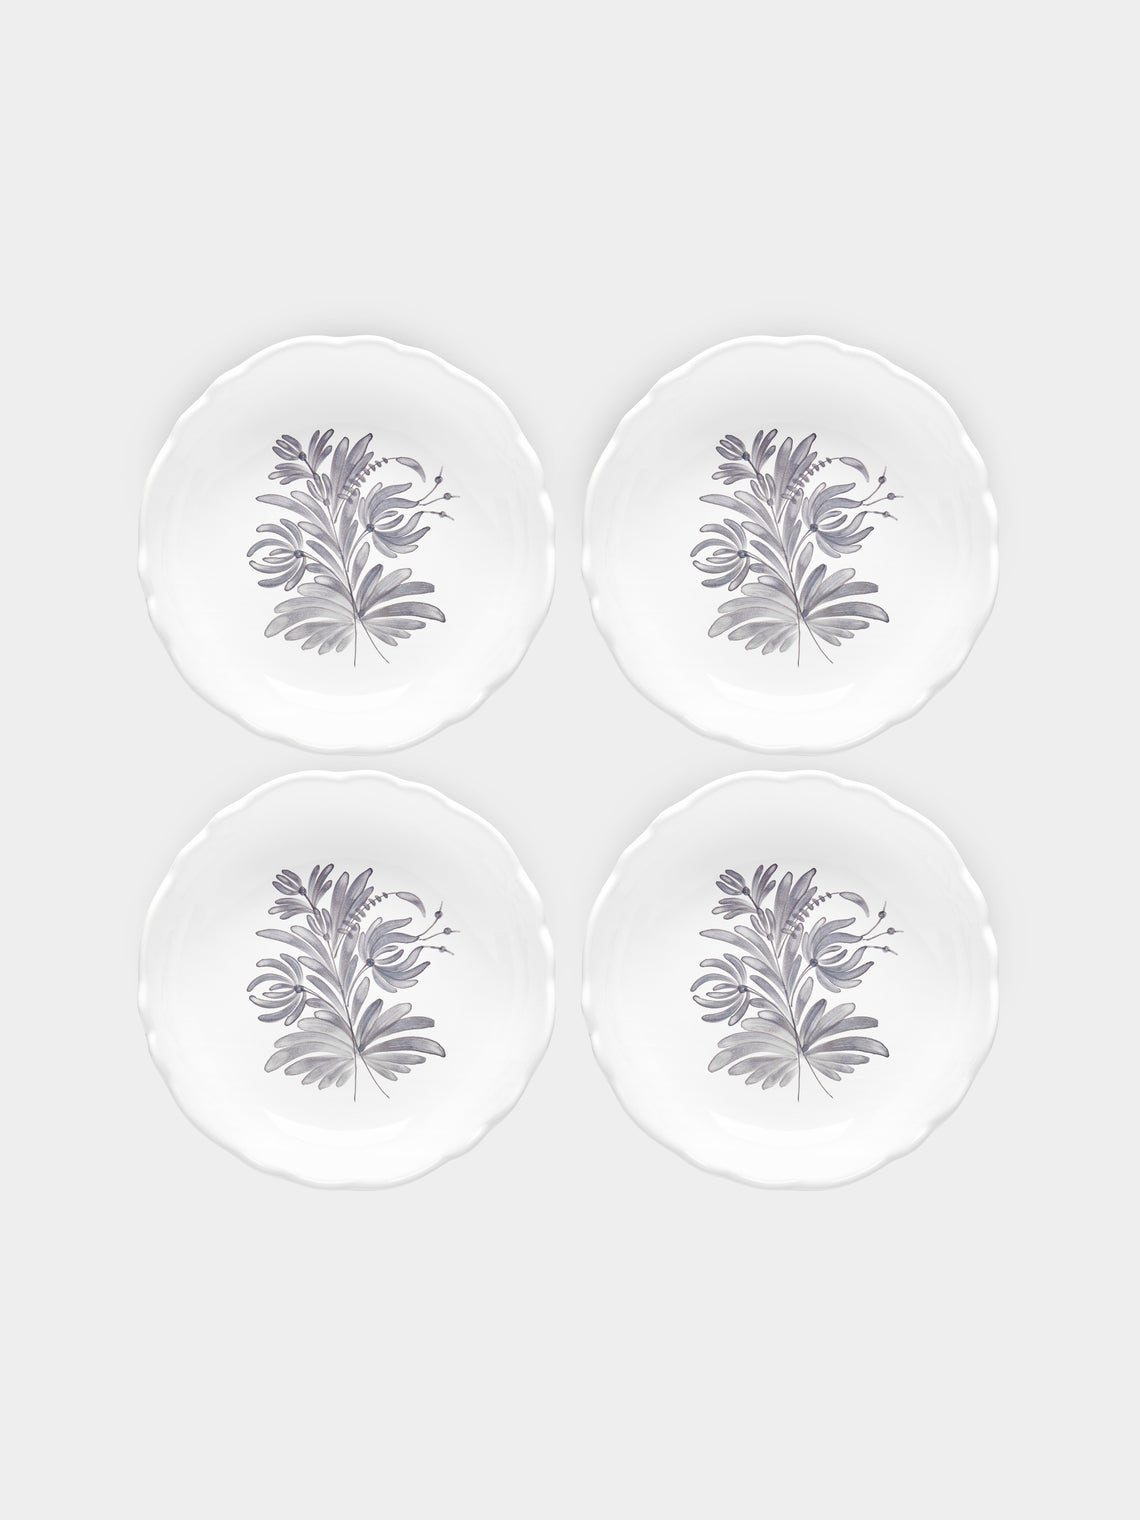 Bourg Joly Malicorne - Antique Fleurs Hand-Painted Ceramic Soup Bowls (Set of 4) -  - ABASK